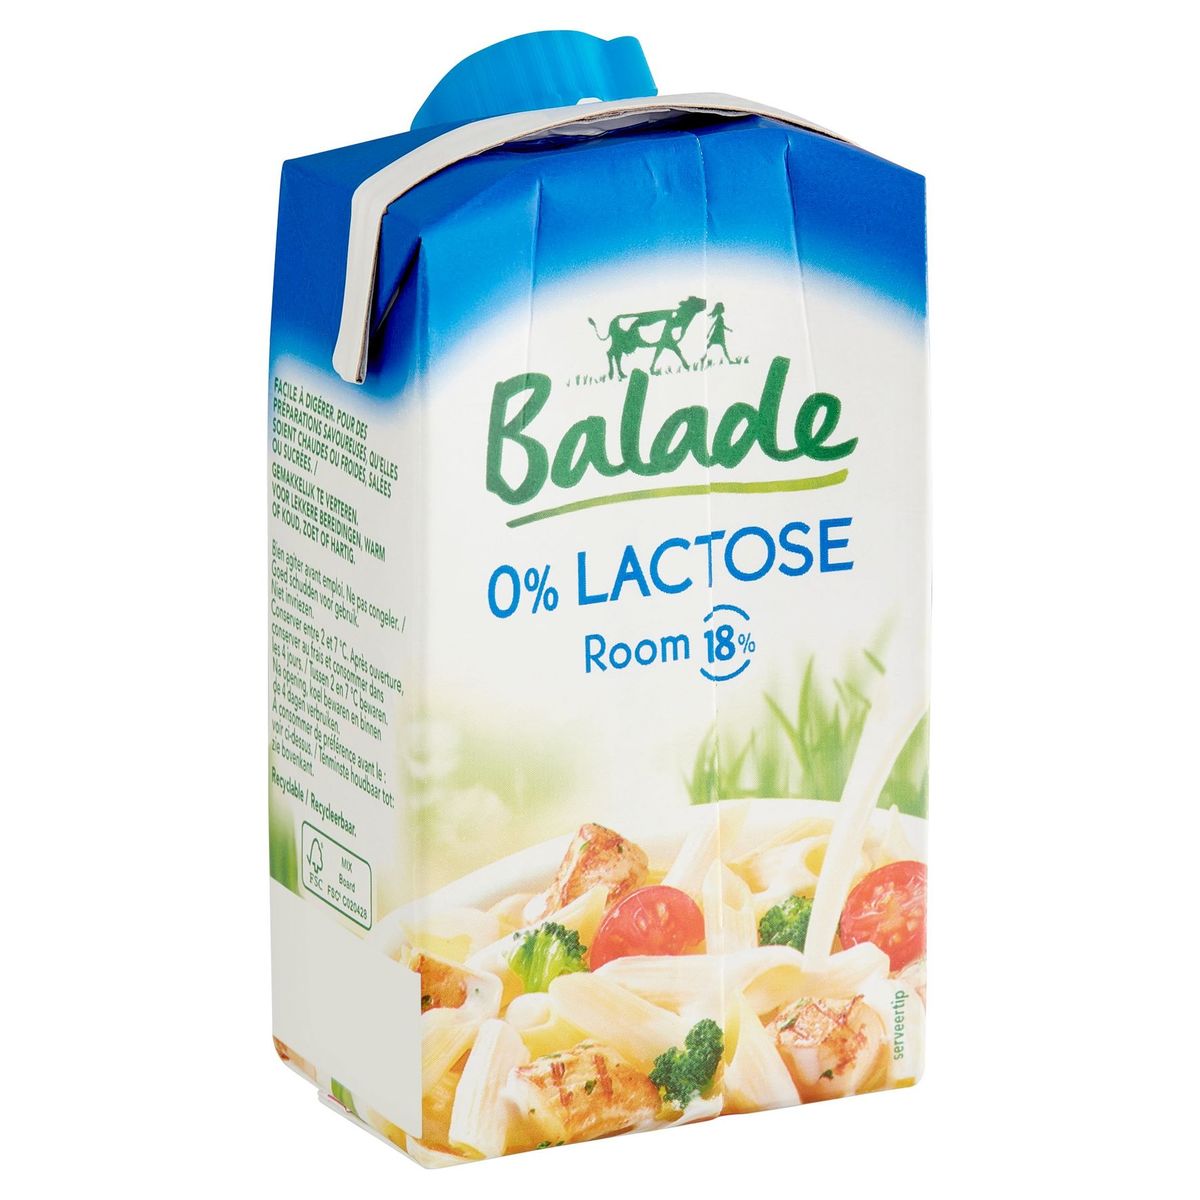 Balade 0% Lactose Room 18% 25 cl